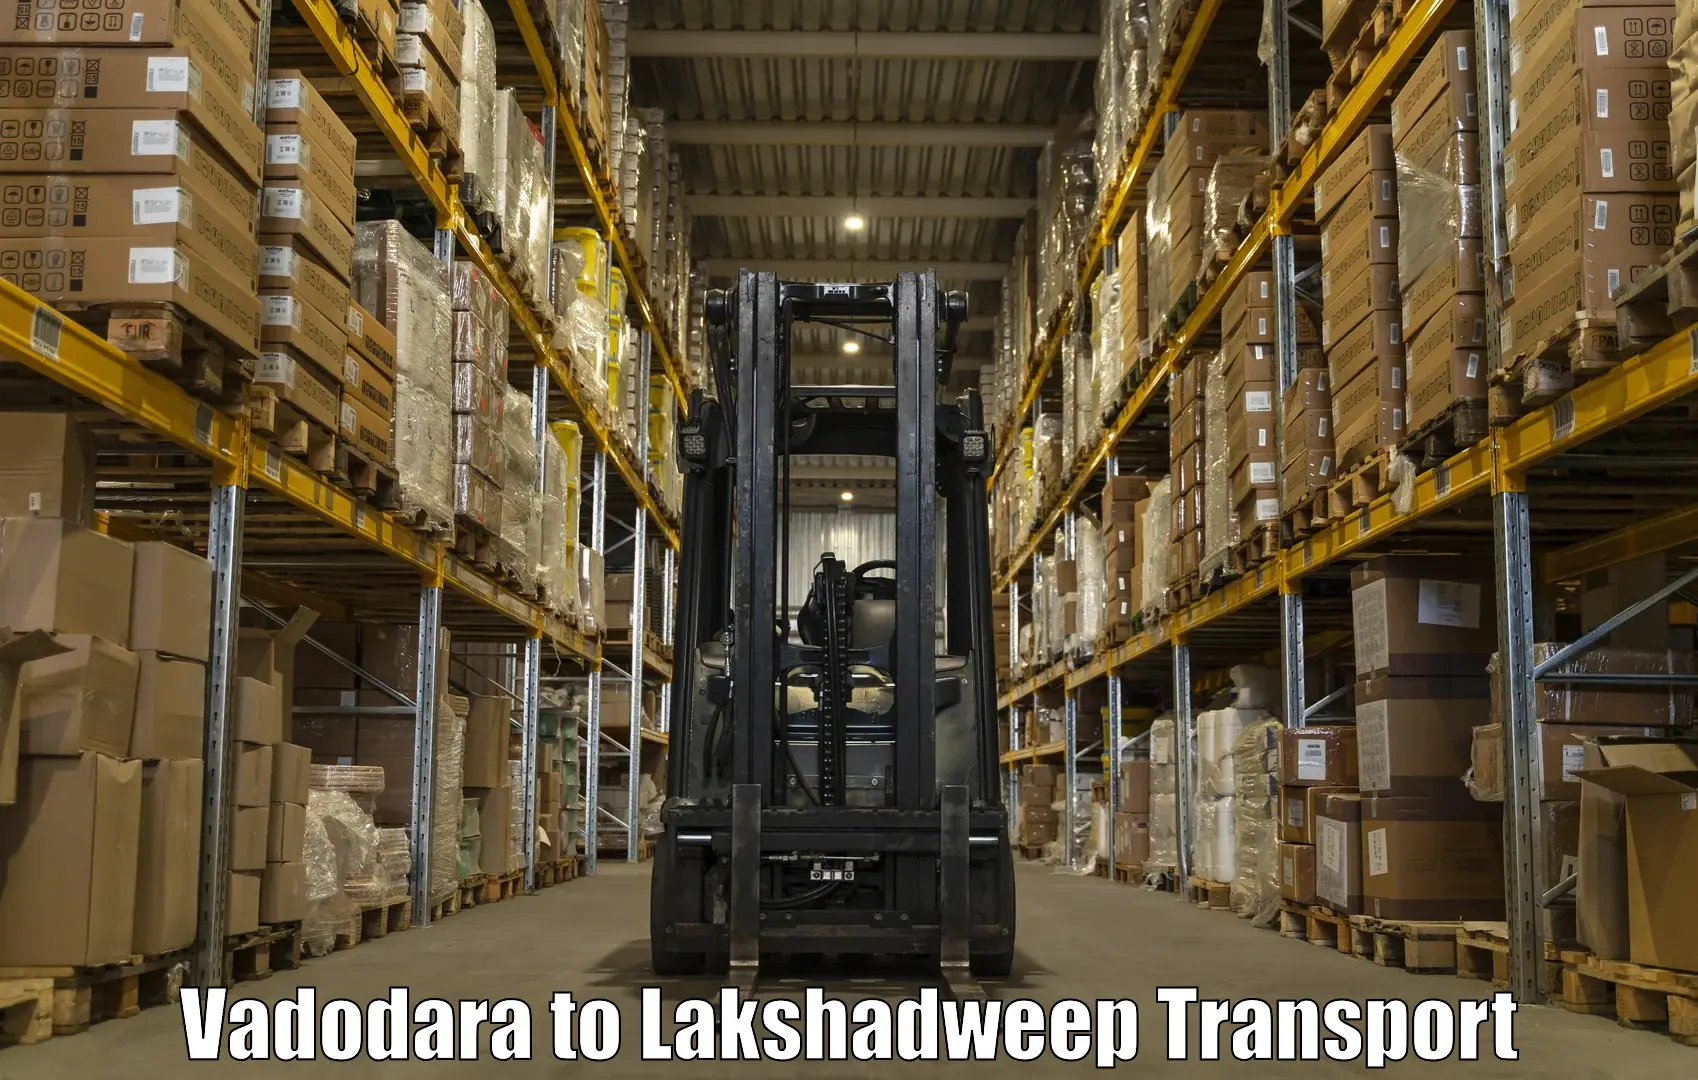 Truck transport companies in India Vadodara to Lakshadweep